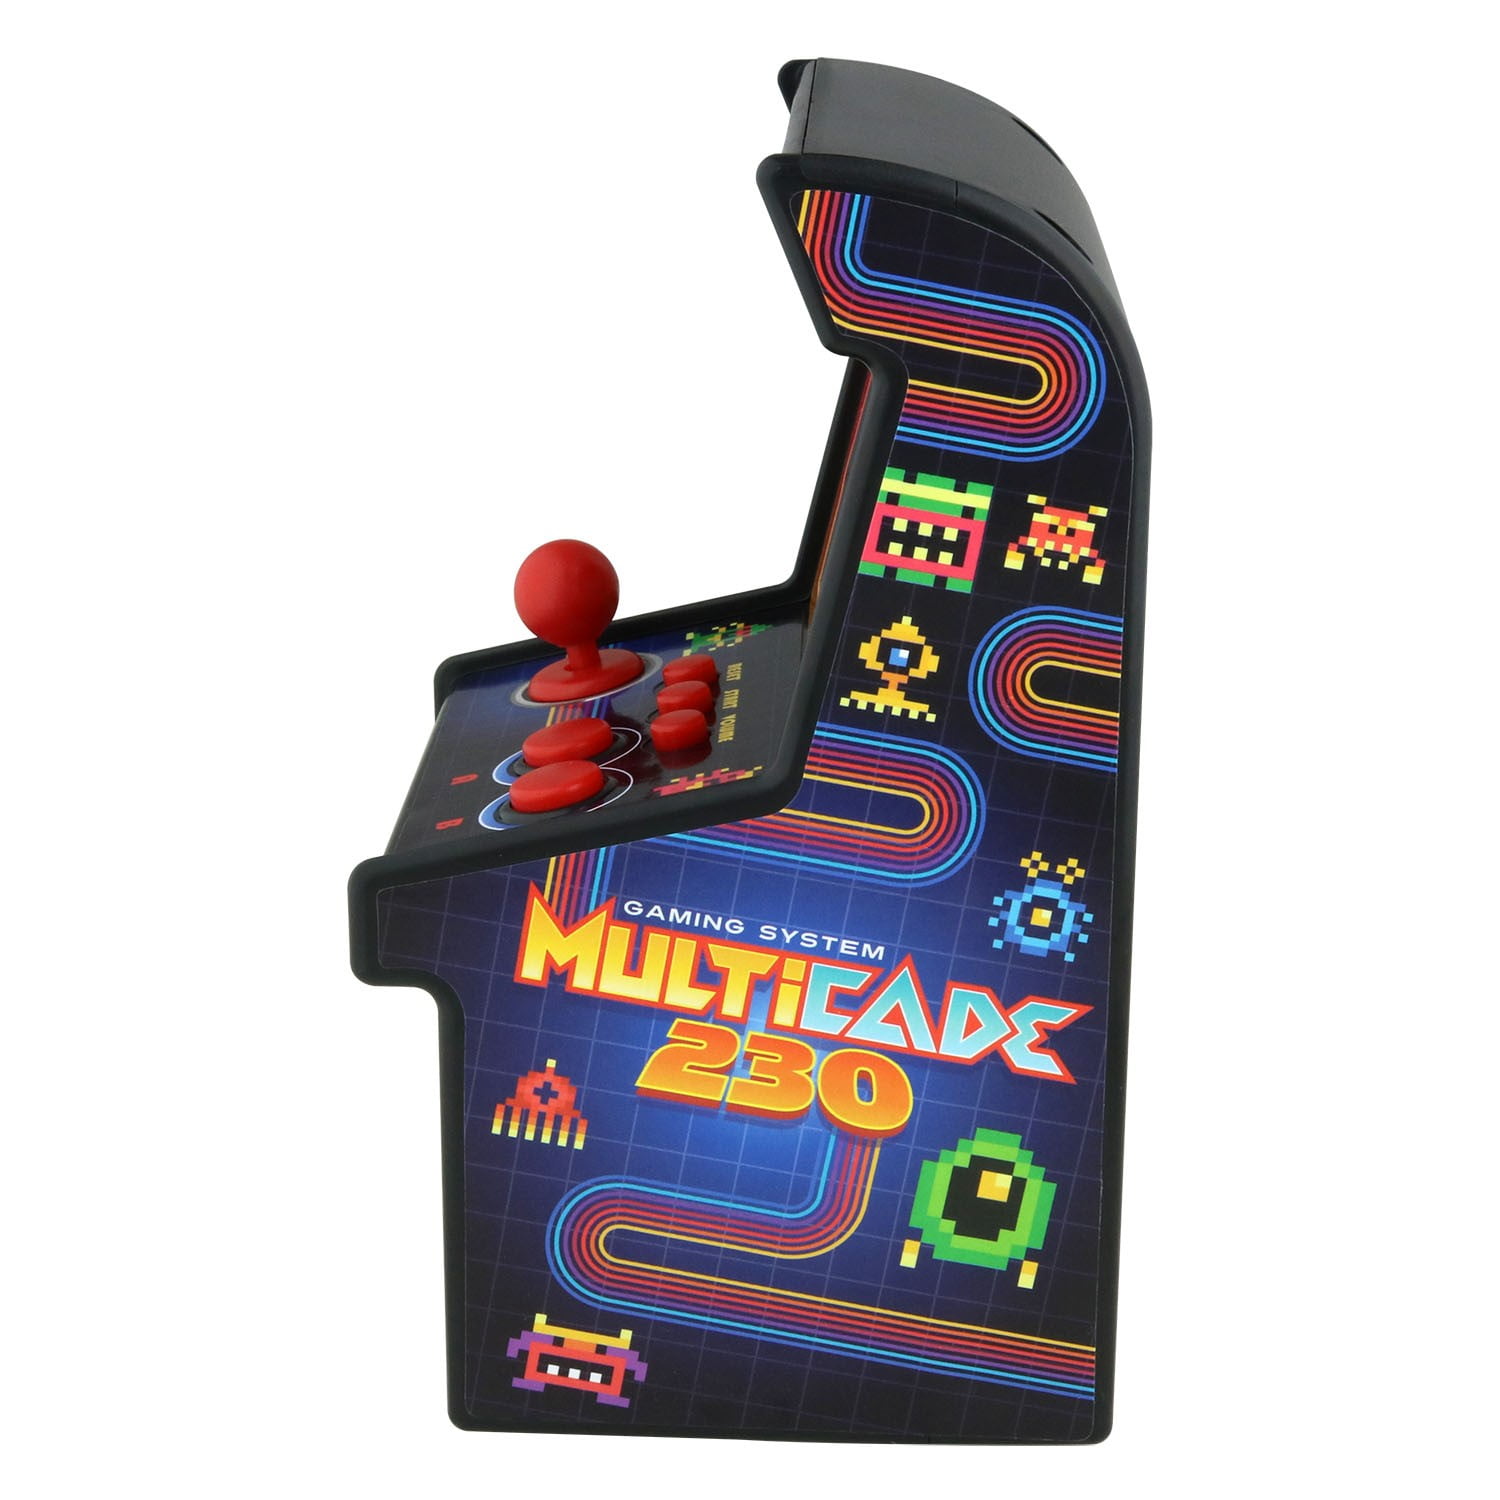 SoundLogic XT Multicade 230 Mini Retro Arcade Video Game Machine AGS-12 6406 for sale online 